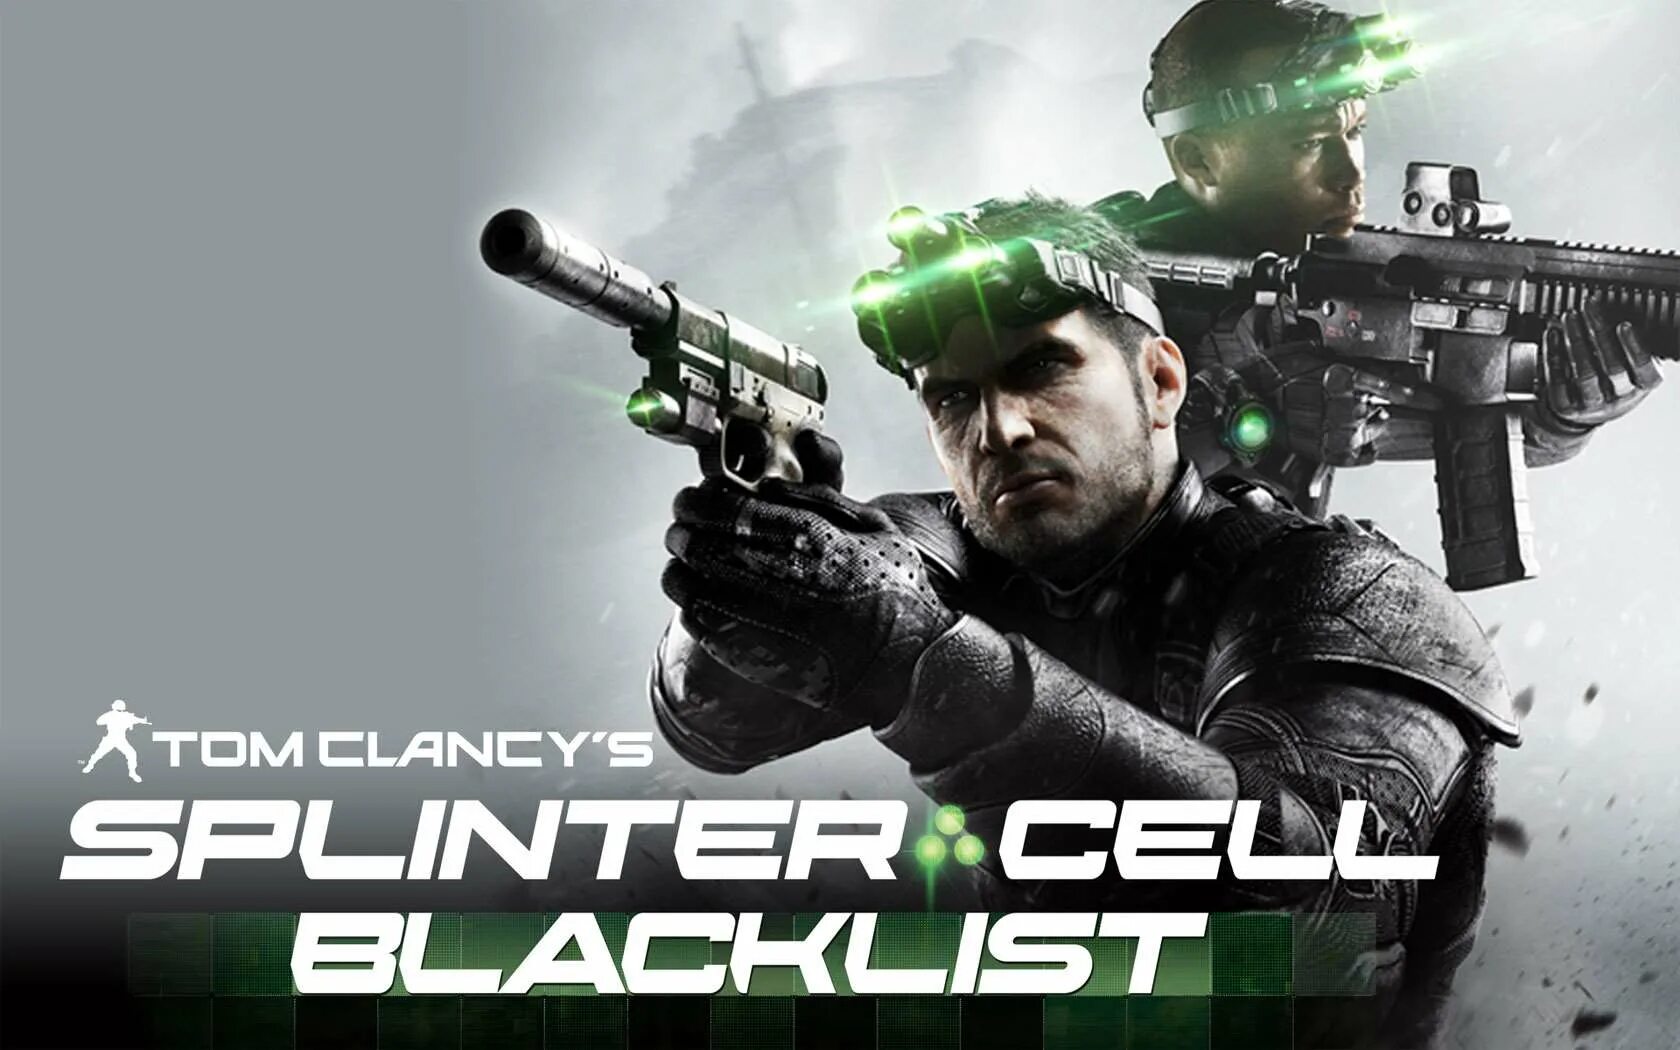 Tom Clancy’s Splinter Cell. Tom Clancy’s Splinter Cell: Blacklist. Tom Clancy s Splinter Cell: Blacklist. Tom Clancy’s Splinter Cell: Blacklist 2.